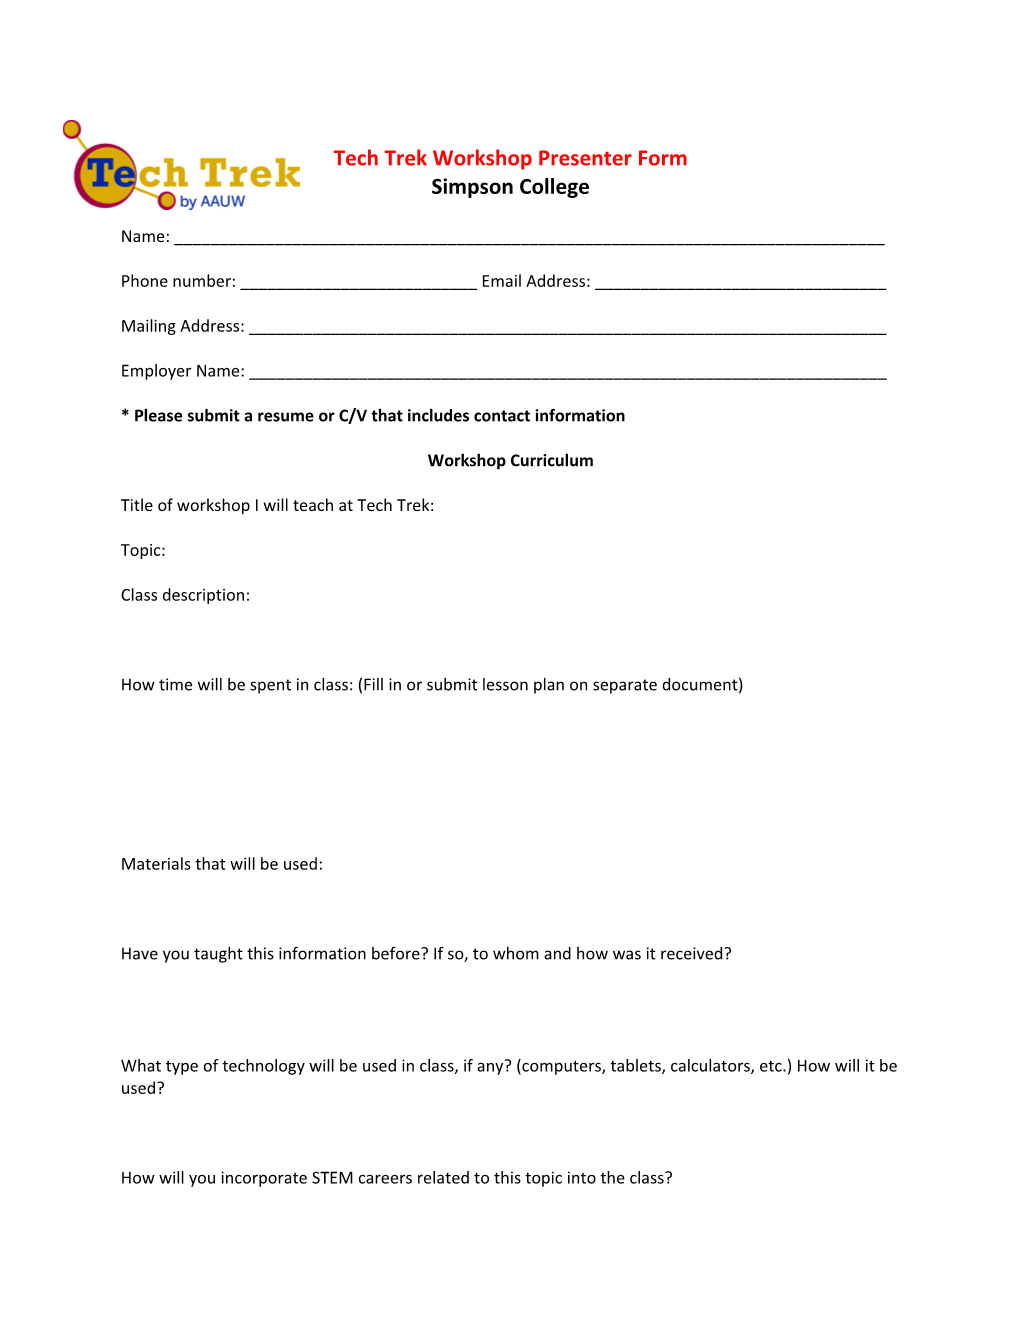 Tech Trek Workshop Presenter Form